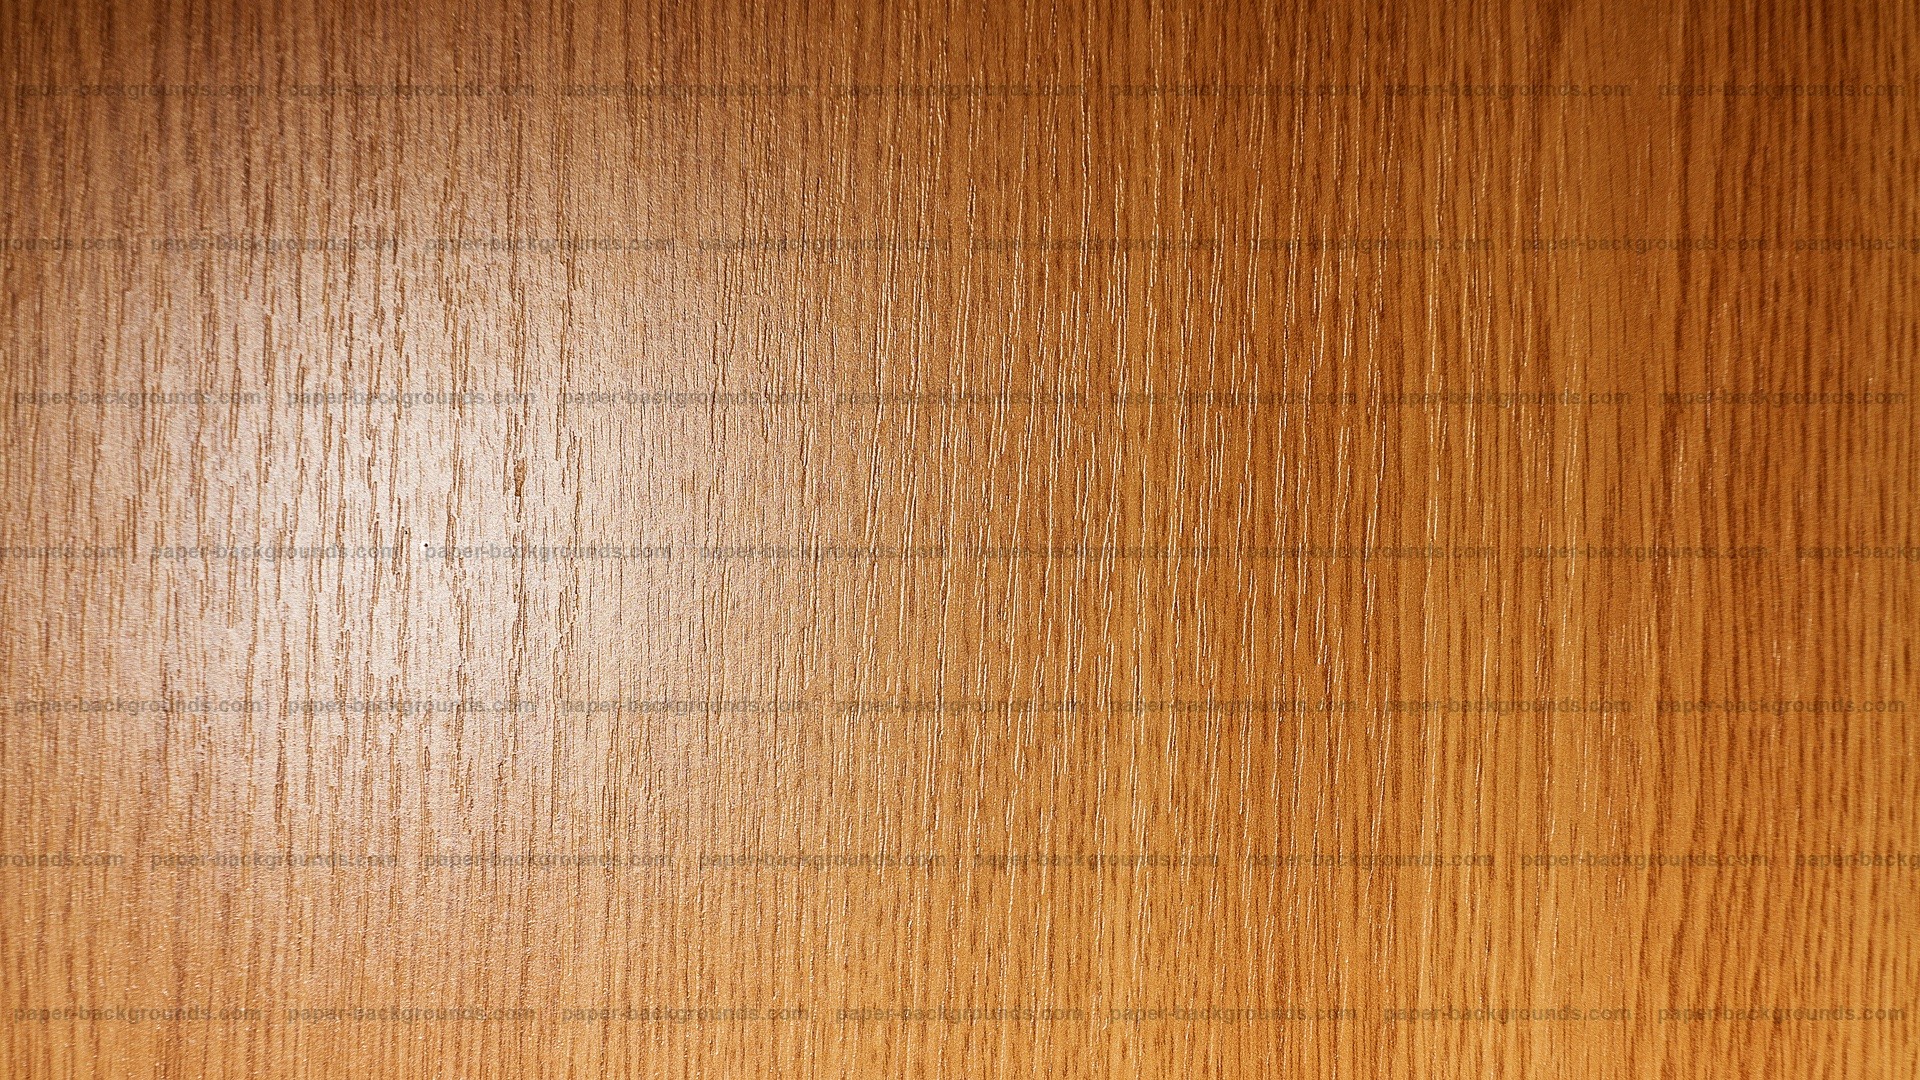 1920x1080, Brown Wood Furniture Background Texture - 1920x1080 Wallpaper -  